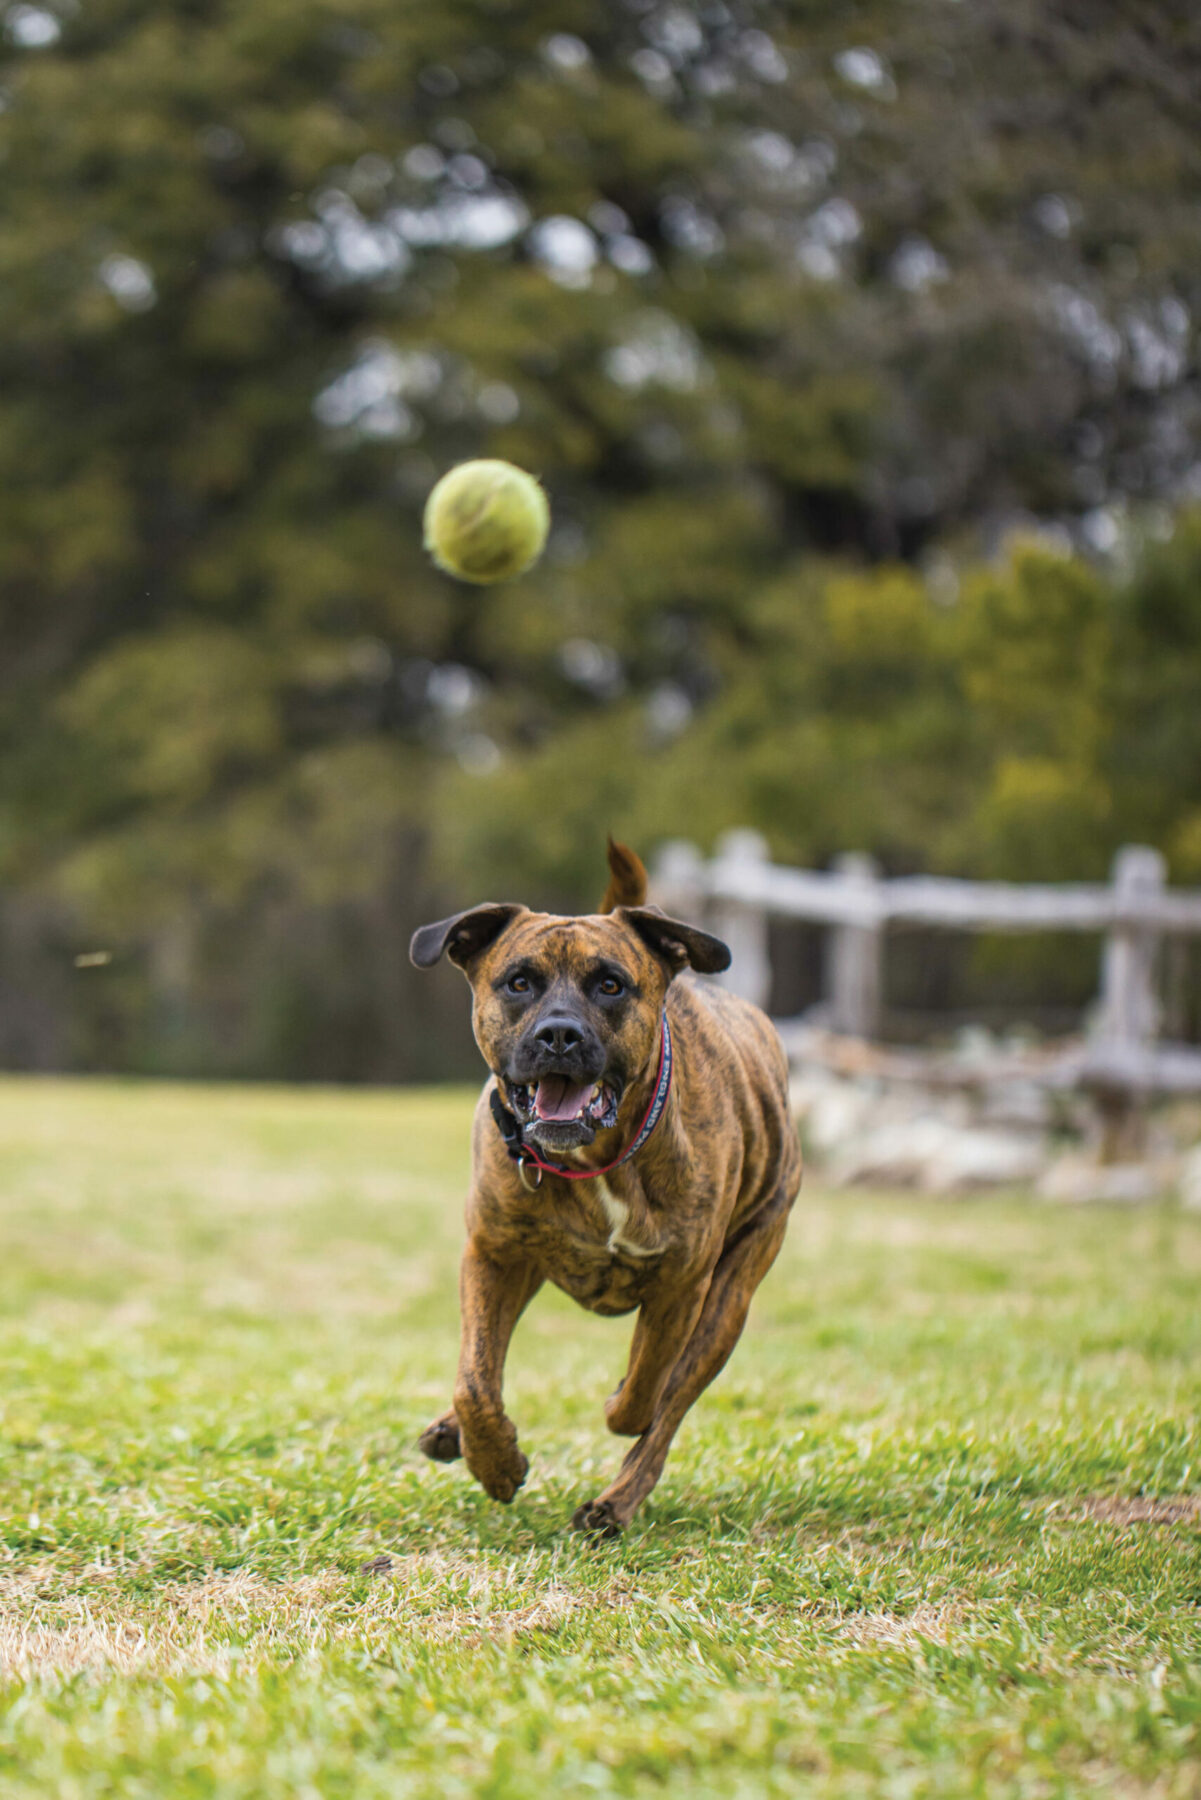 Kanan chasing a ball.